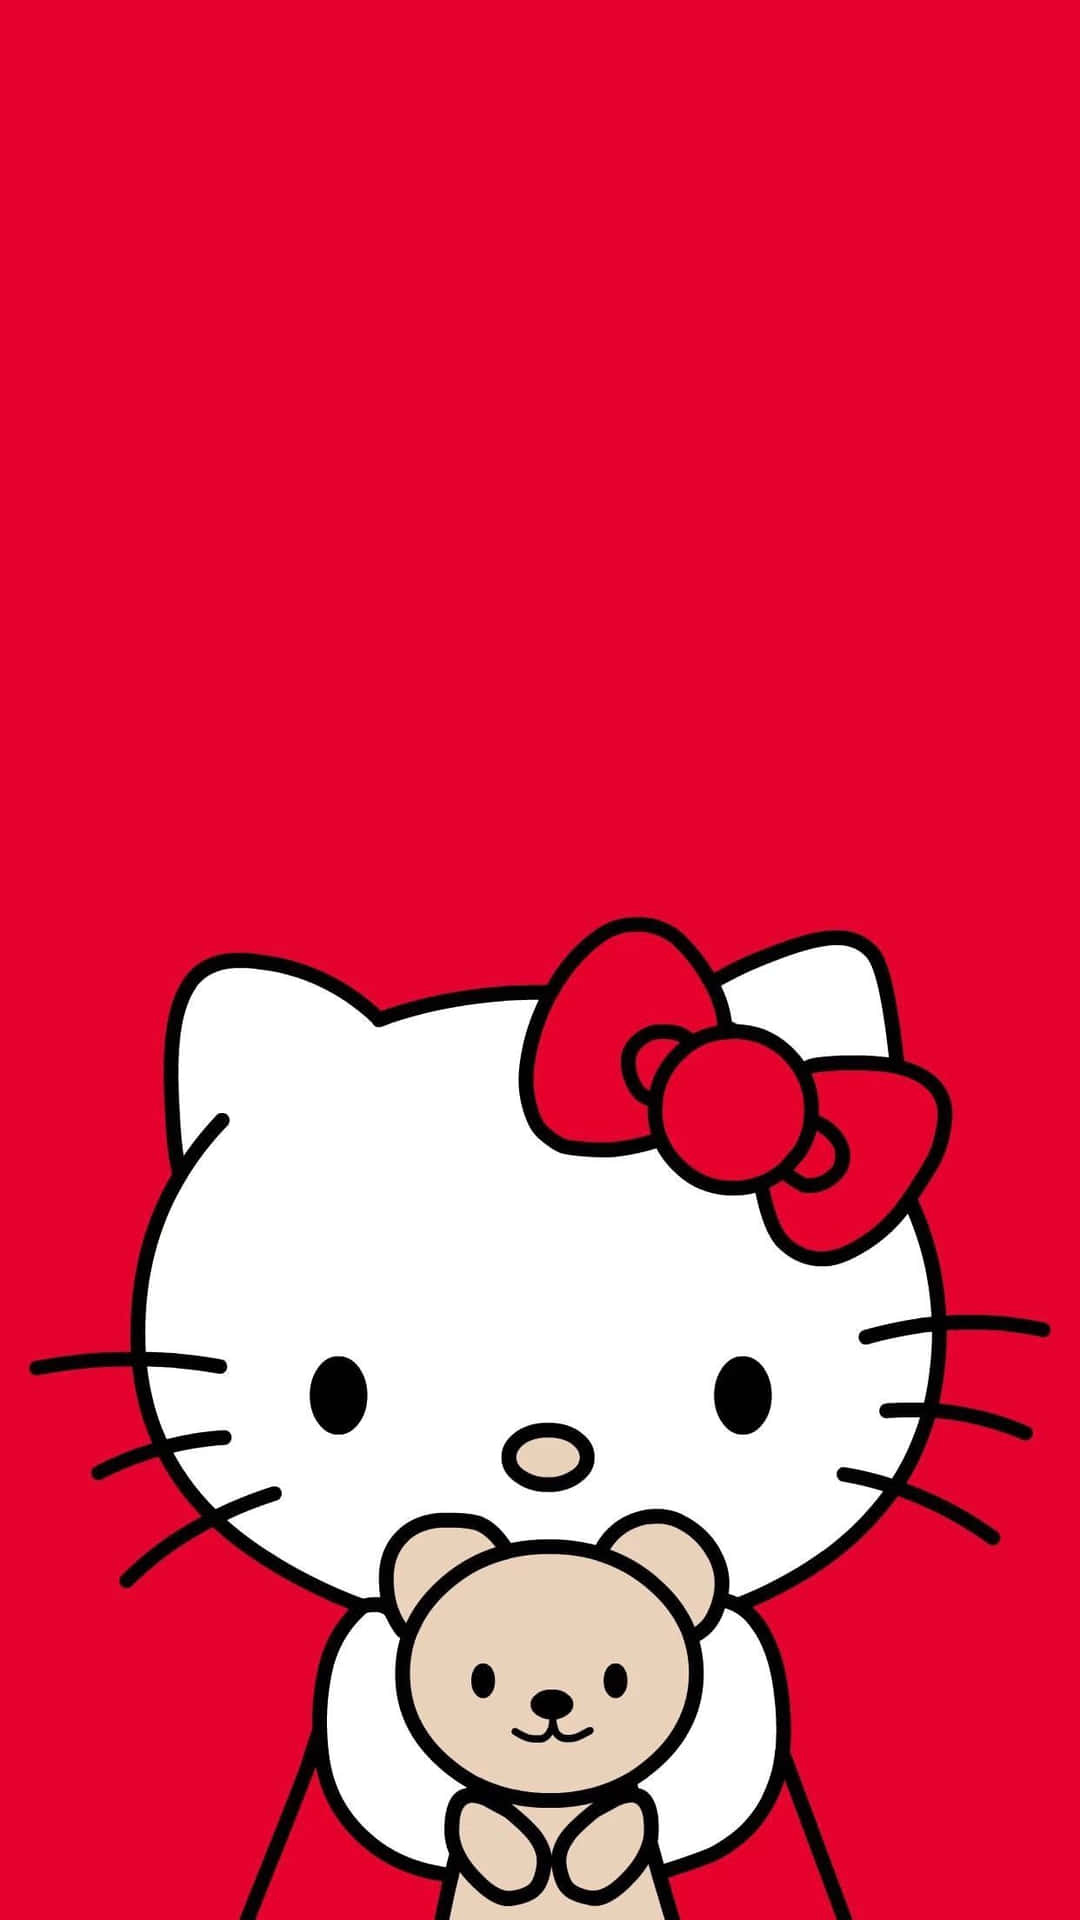 21 Cute Hello Kitty Wallpaper Ideas For Phones  Red Wallpaper  Idea  Wallpapers  iPhone WallpapersColor Schemes